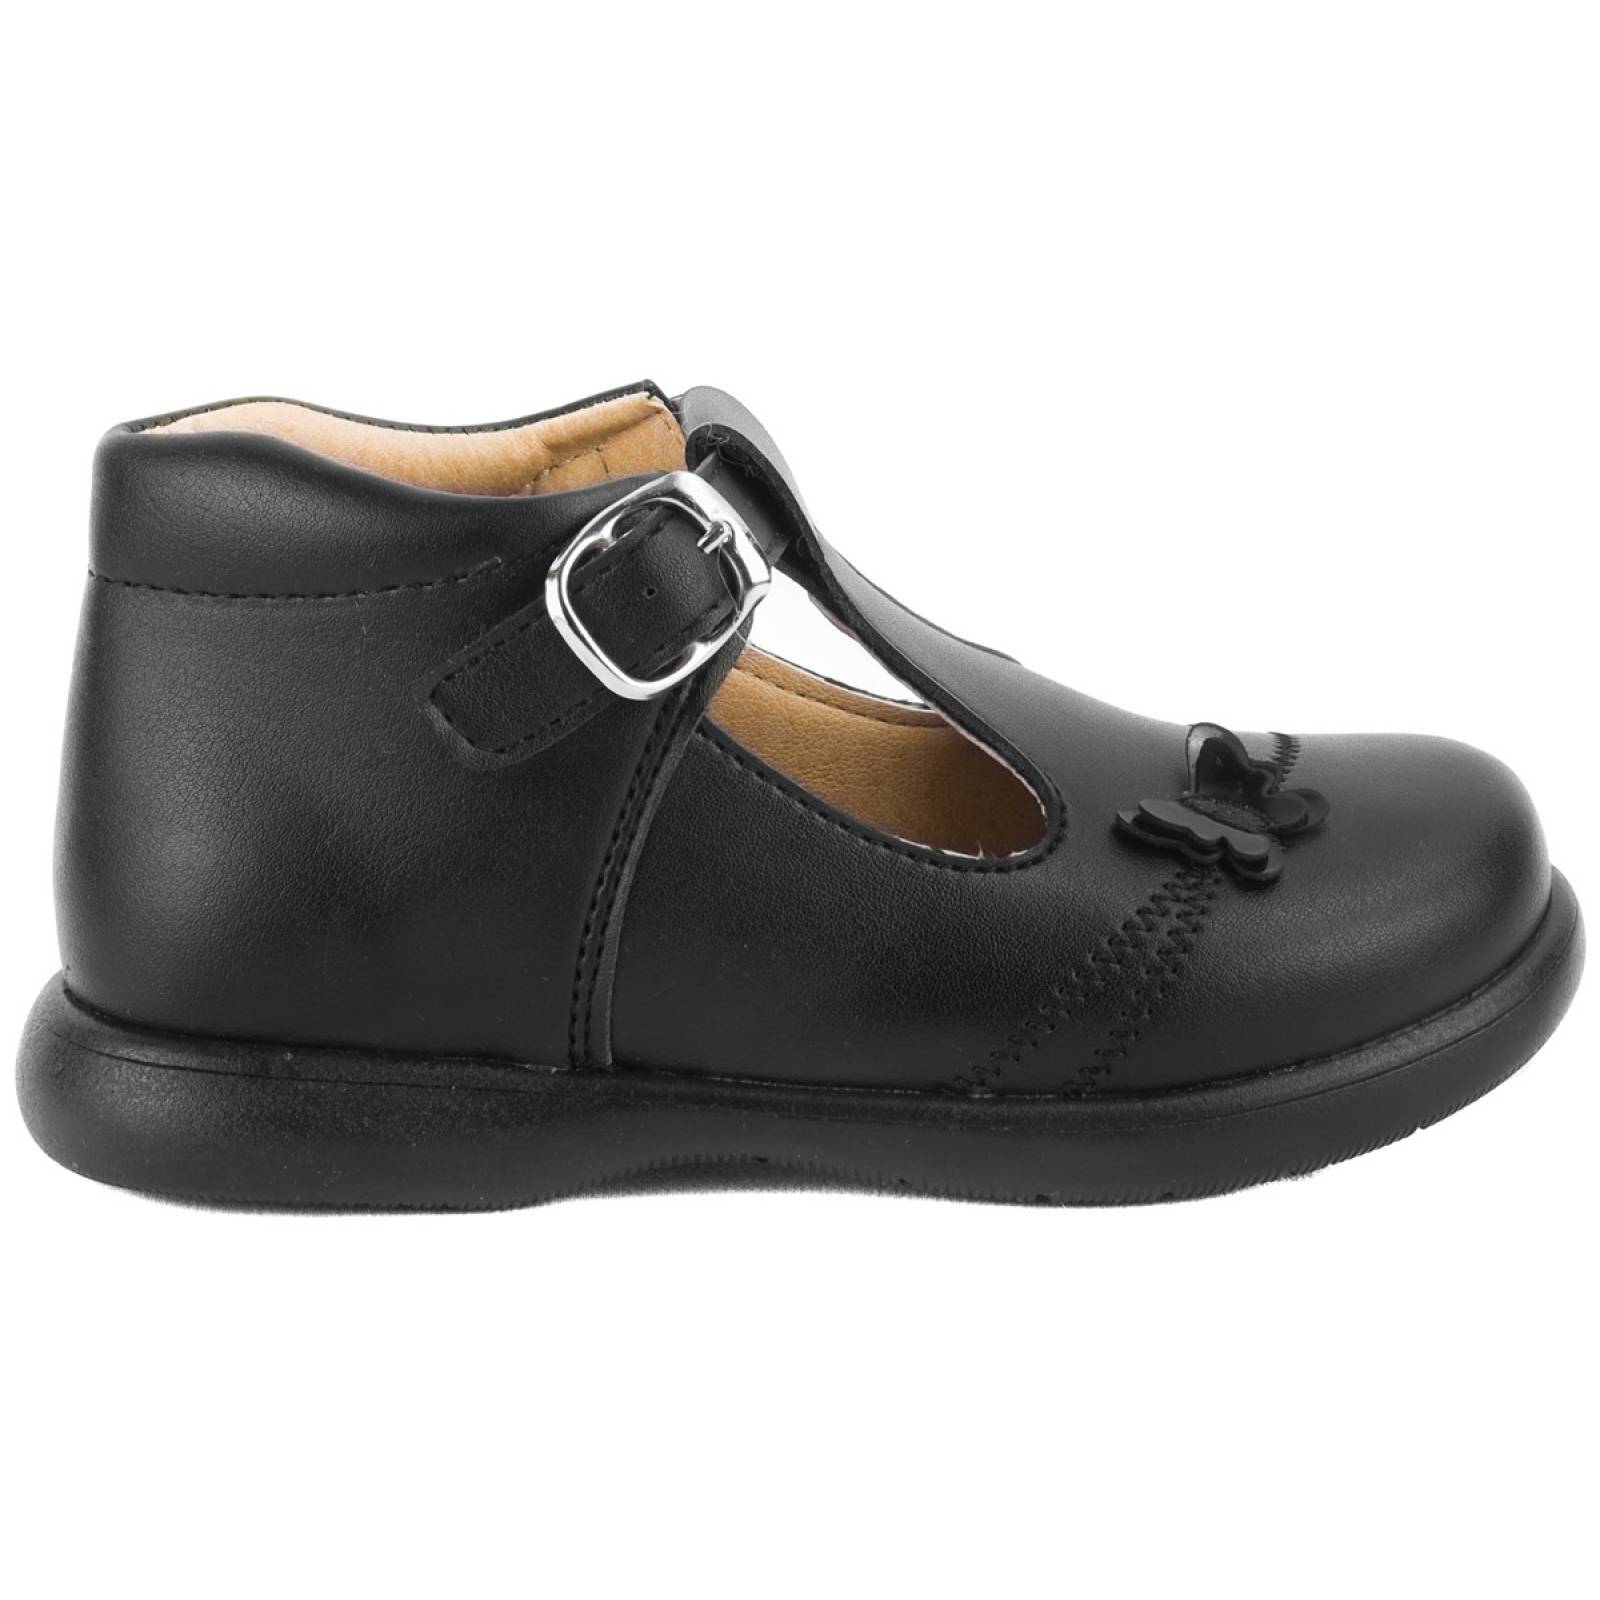 Zapatos Escolares Zapakids niña charol negro (18.0 -21.0)